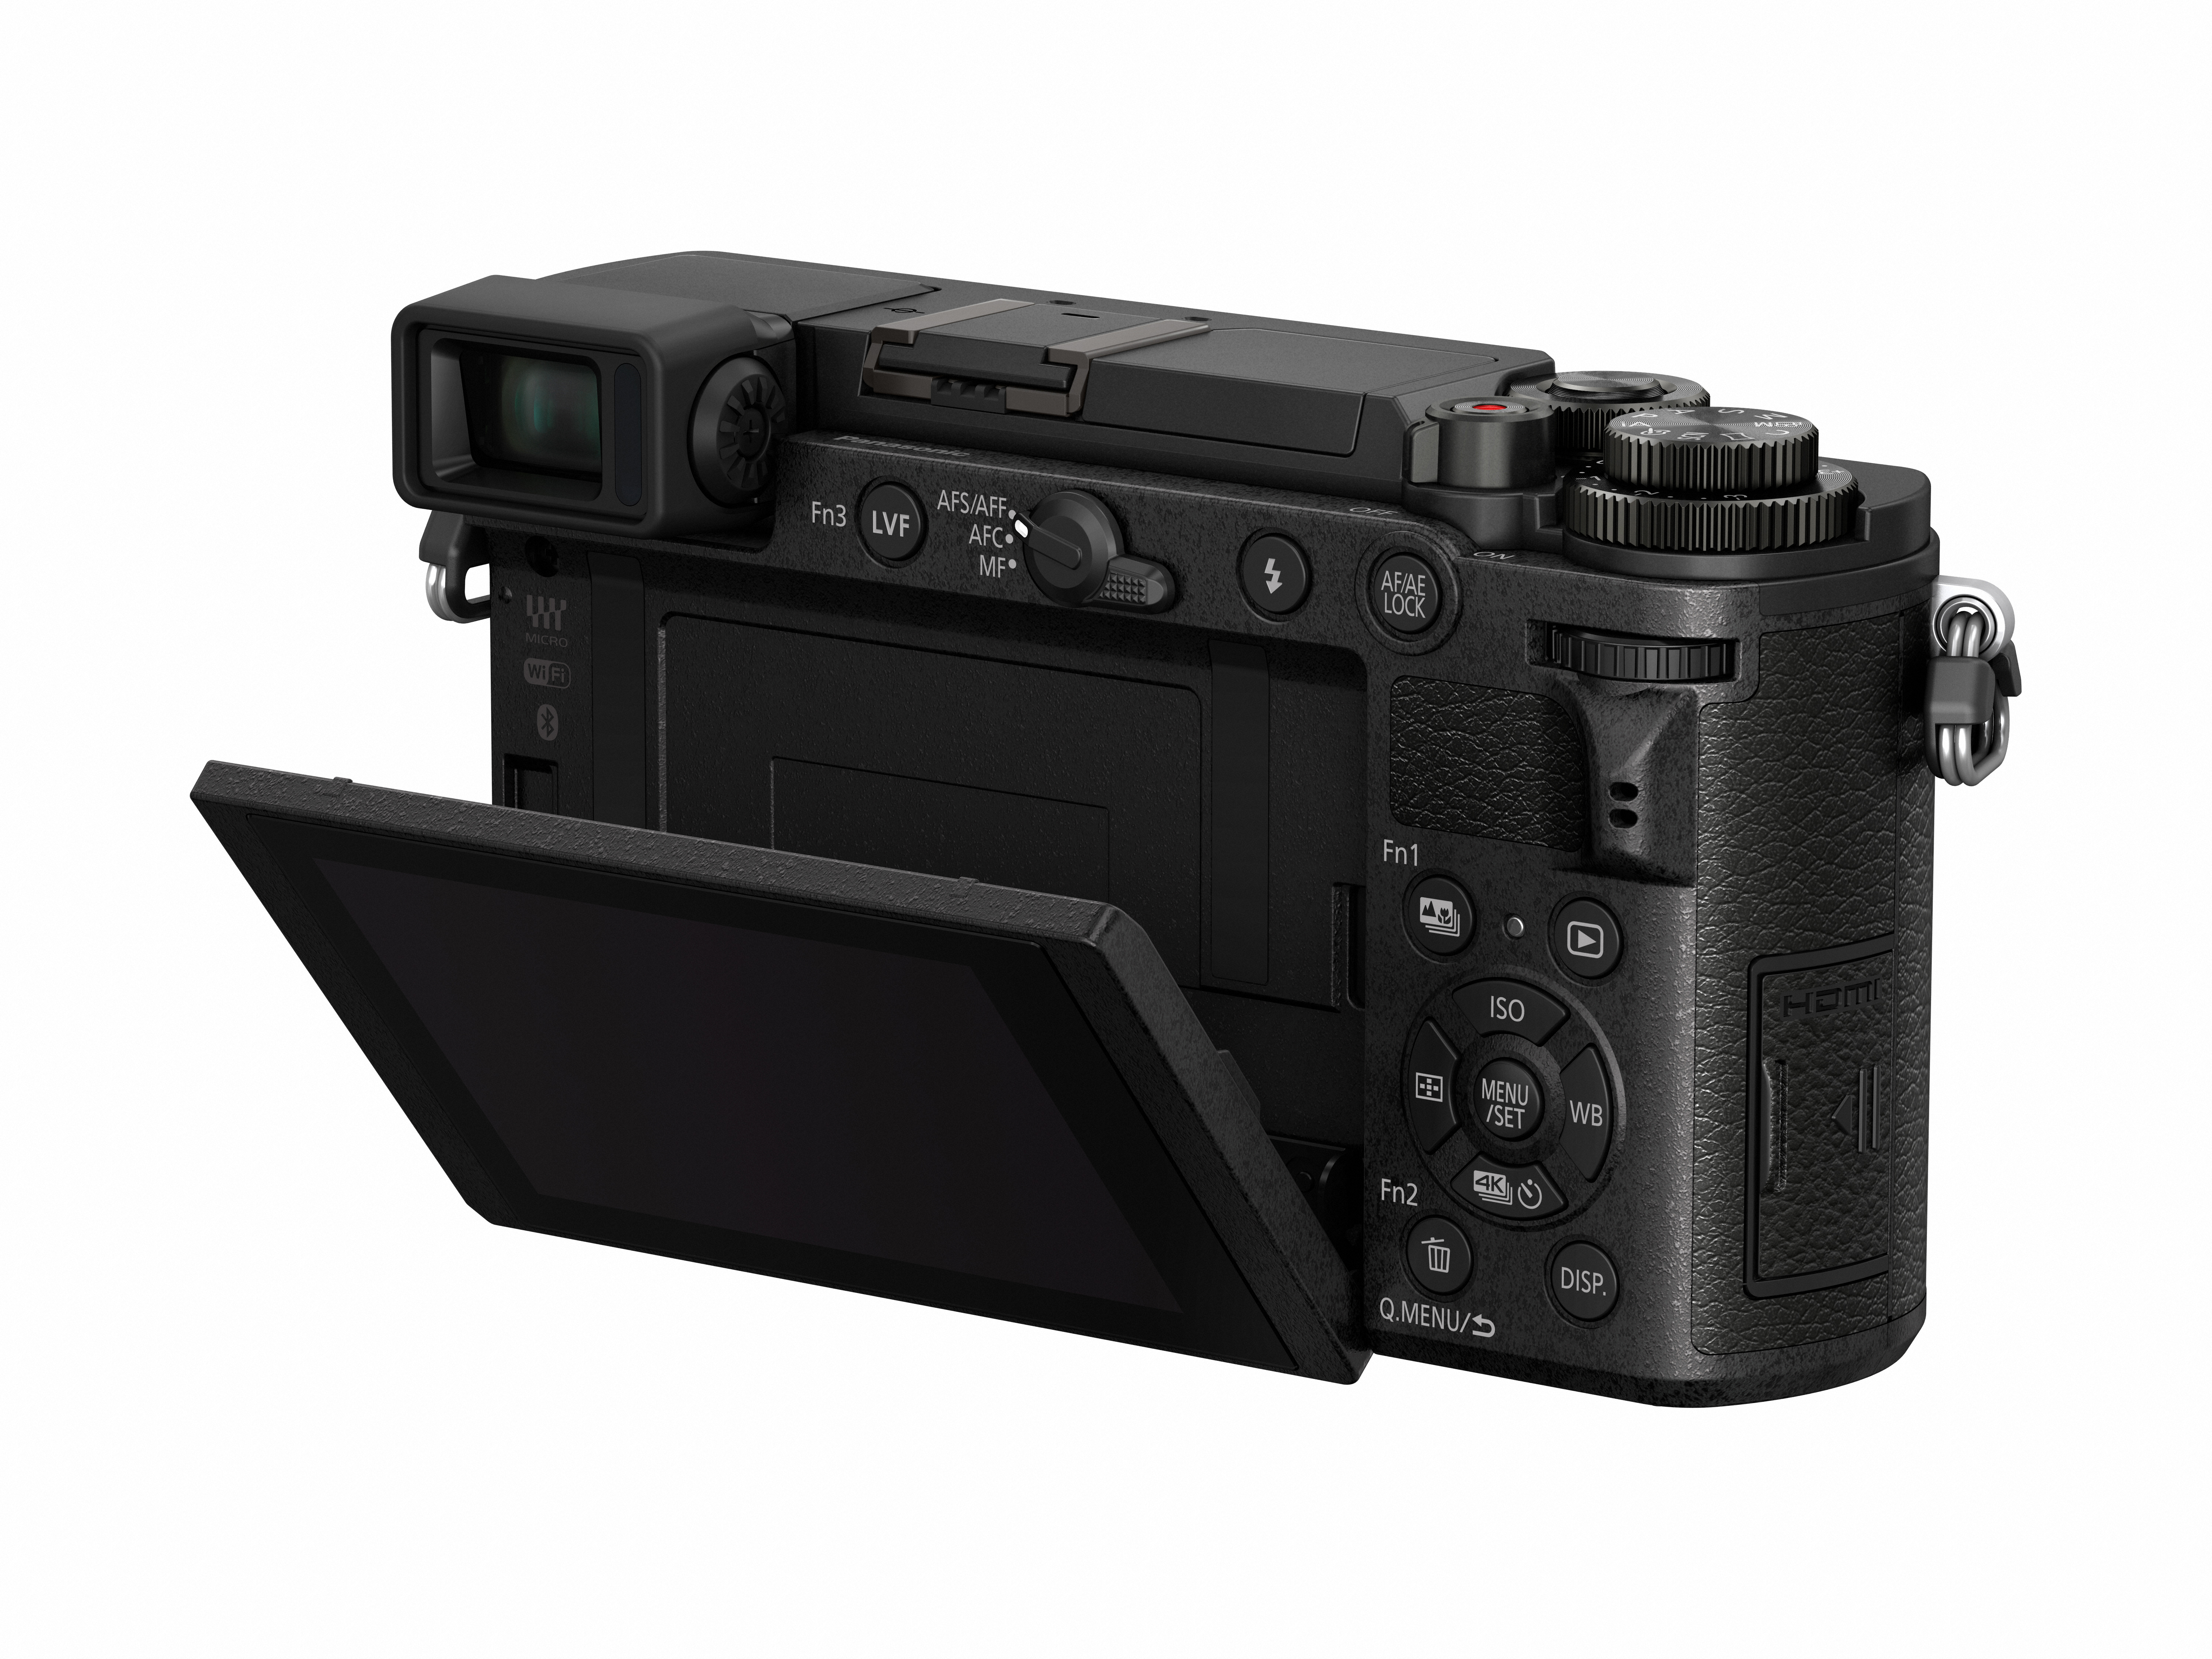 PANASONIC Systemkamera 7,5 Kit Display, Objektiv GX9 cm WLAN LUMIX 14-140 mit mm,